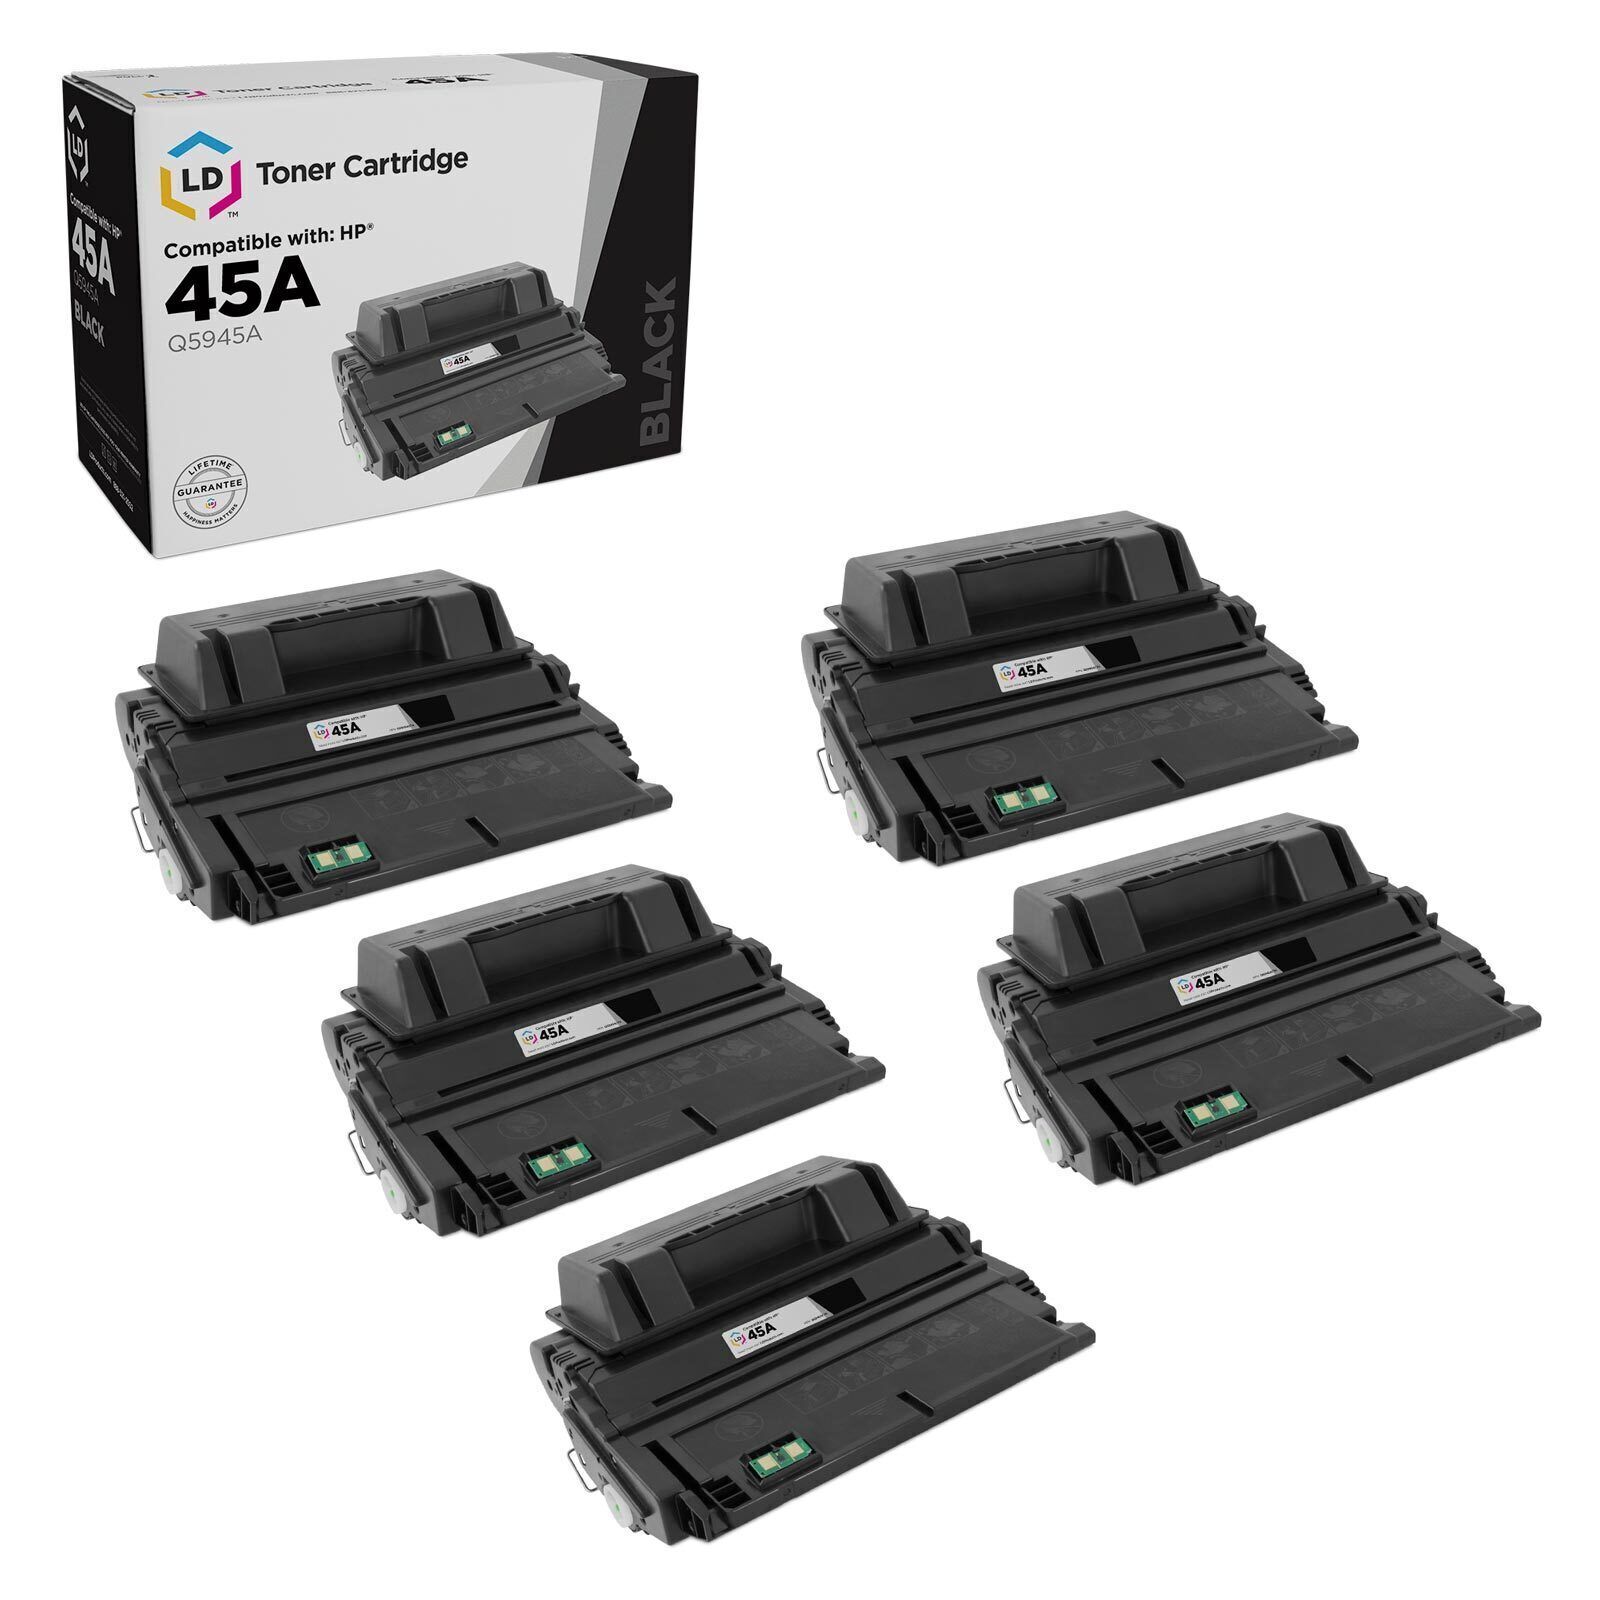 LD Compatible Replacements for HP 45A / Q5945A 5PK Black Toner Cartridges